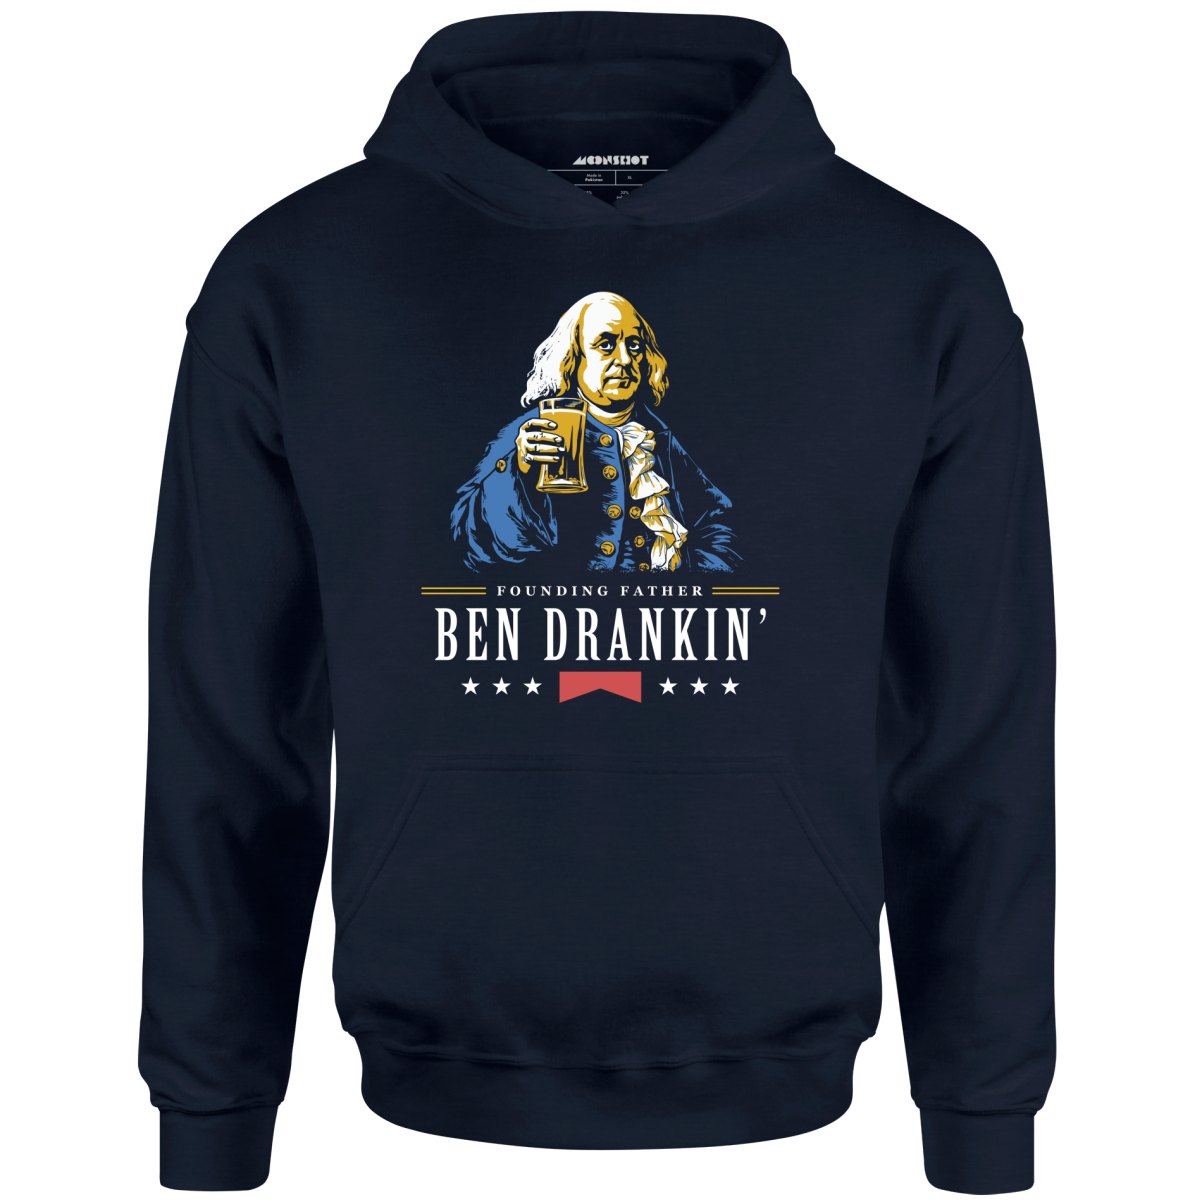 Ben Drankin' Founding Father - Unisex Hoodie